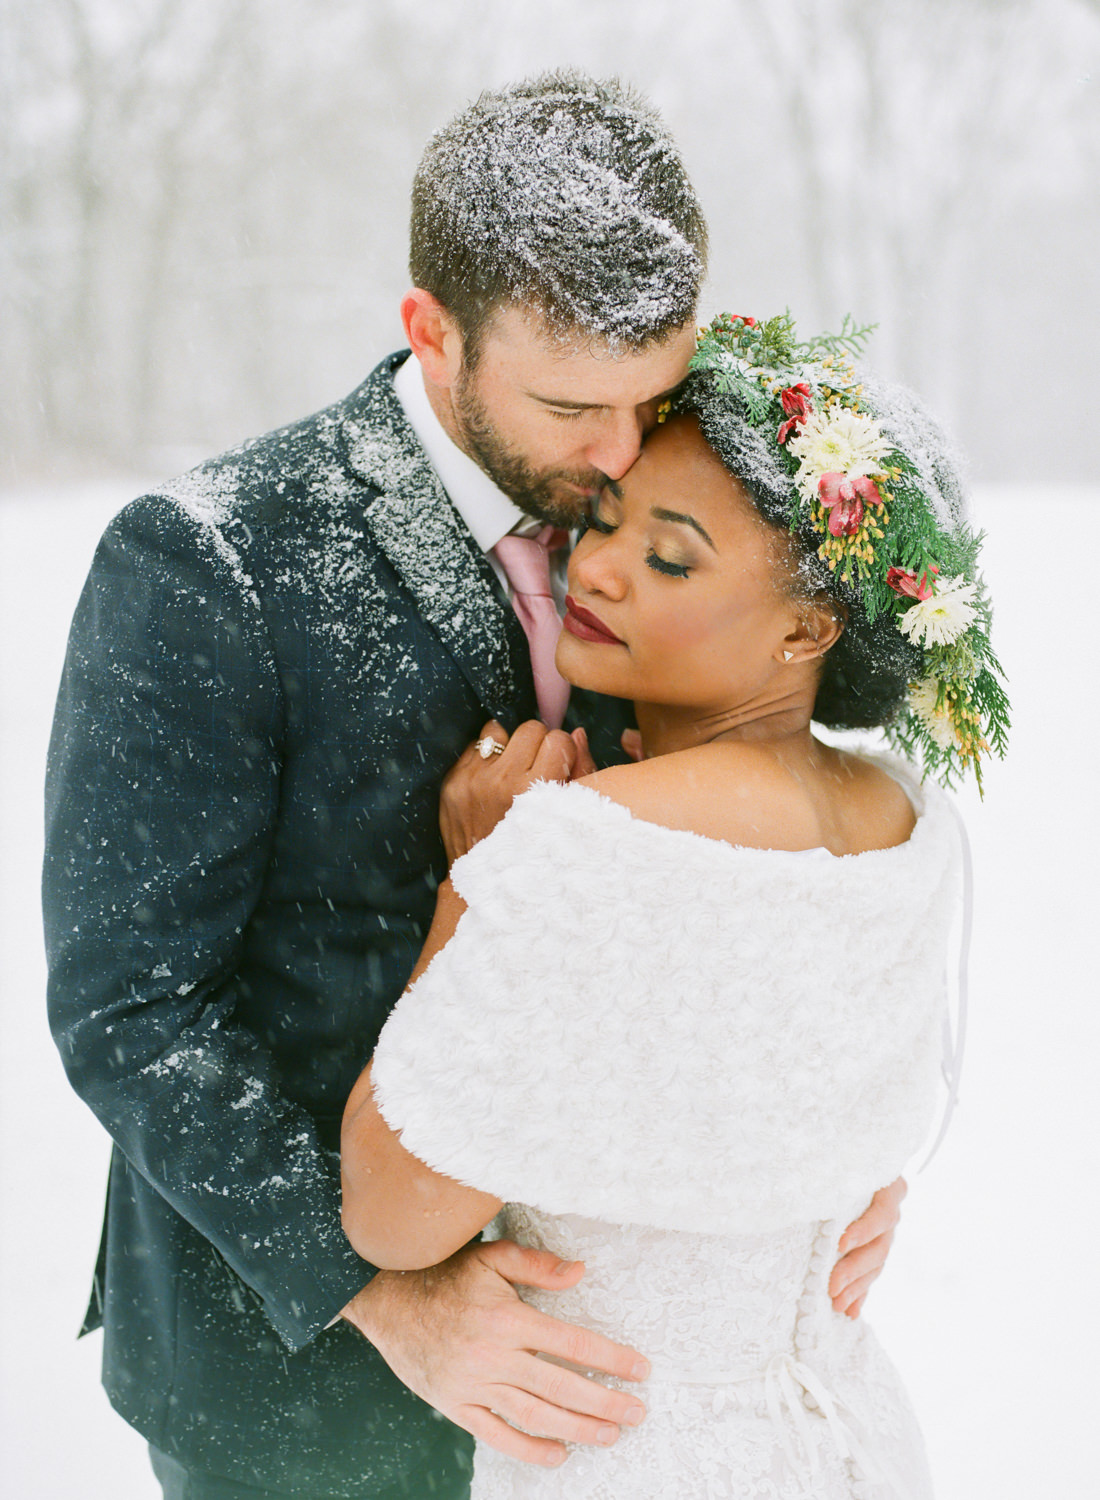 Winter wedding bride in flower crown and groom in snow; St. Louis fine art film wedding photographer Erica Robnett Photography